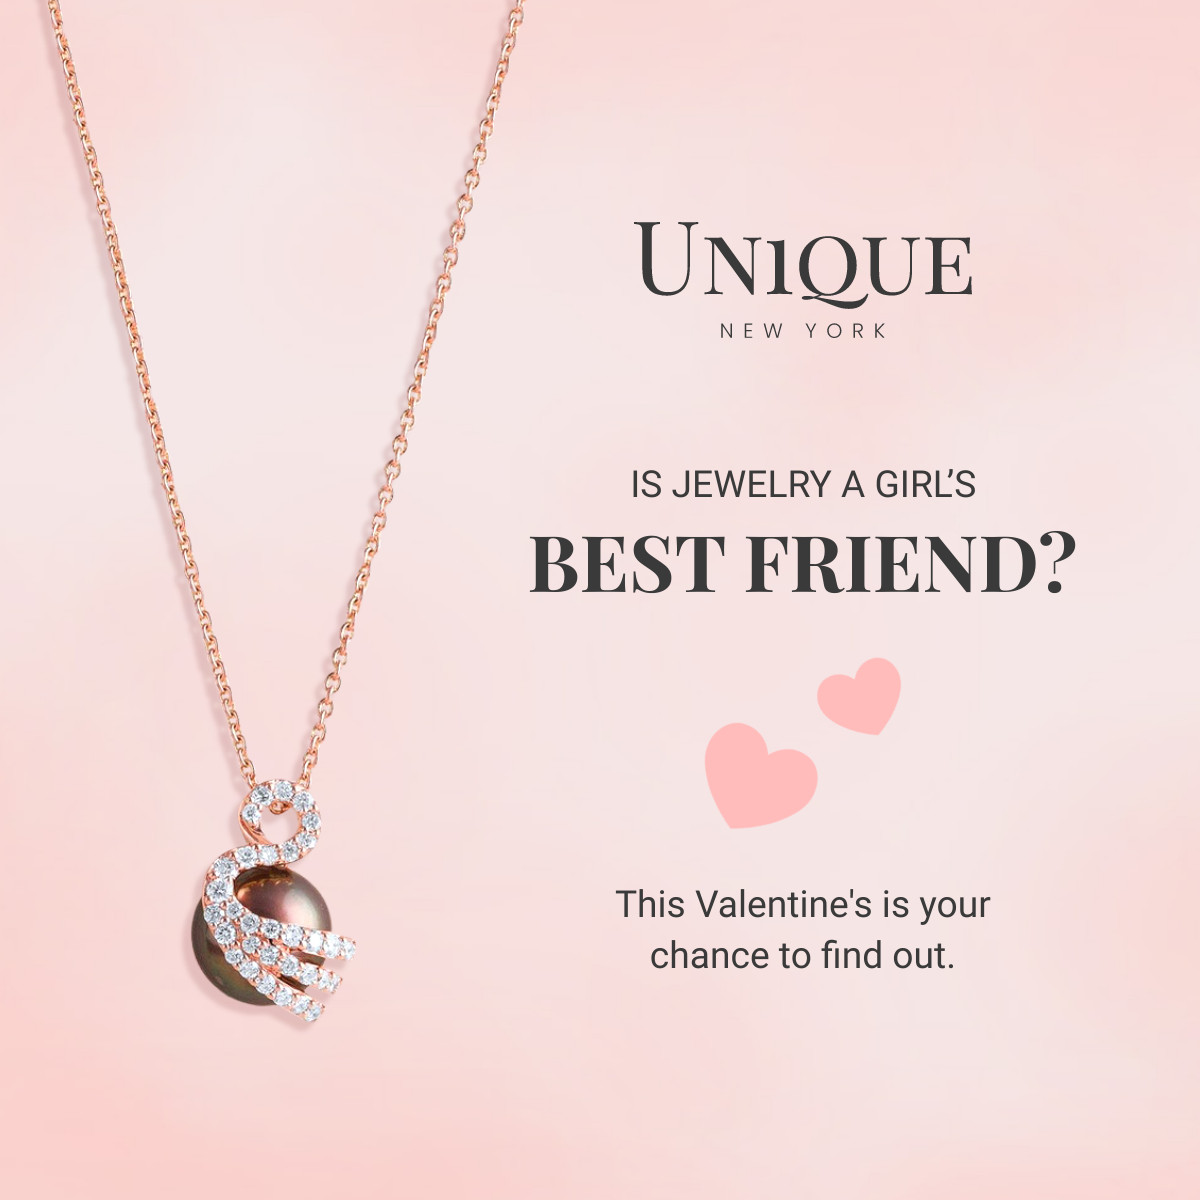 Jewelry Best Friend on Valentine's Day